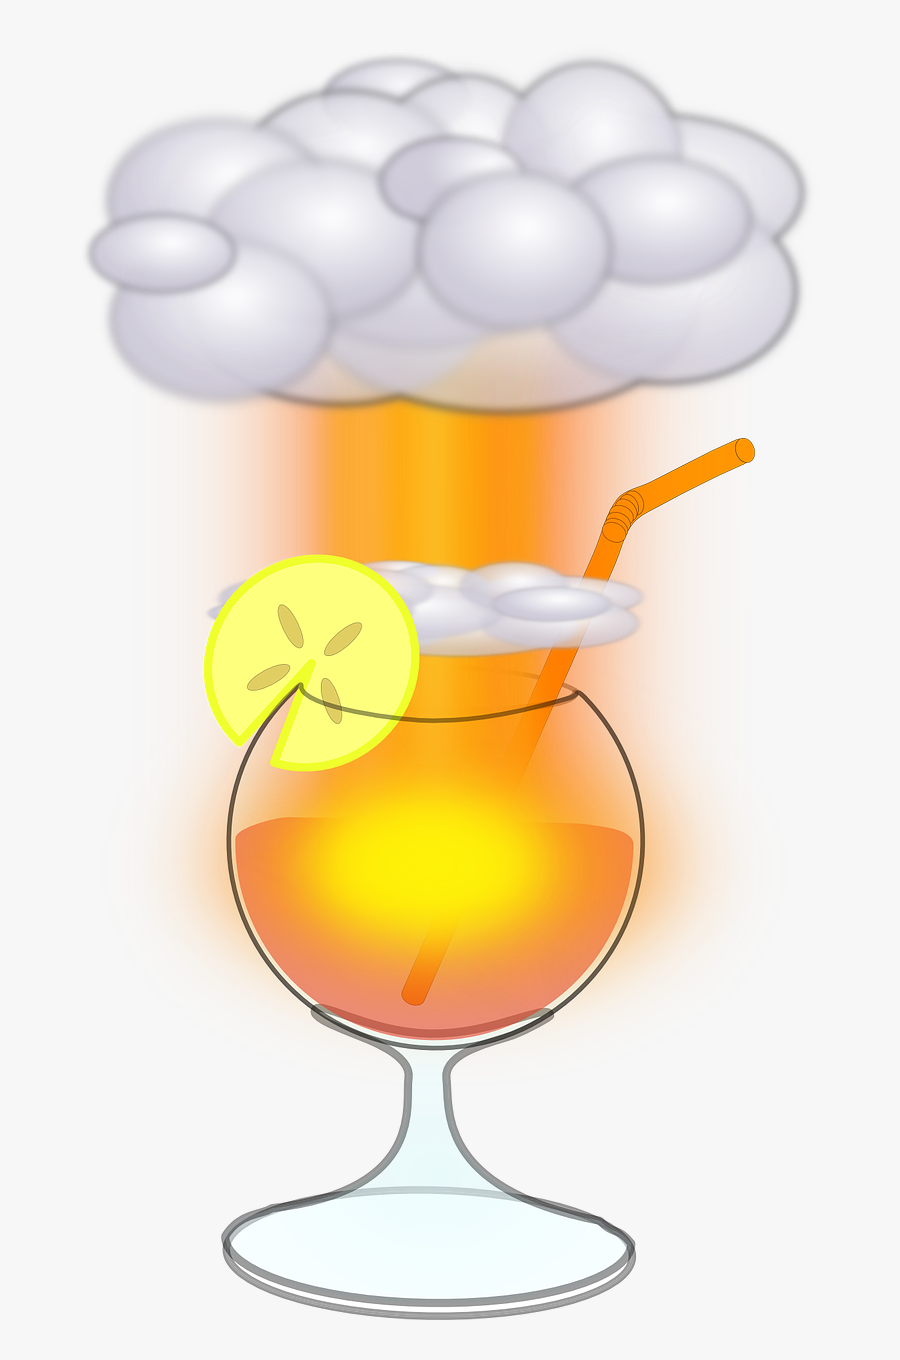 Cloud Mushroom Radioactive Free Picture - Cocktail Clip Art, Transparent Clipart